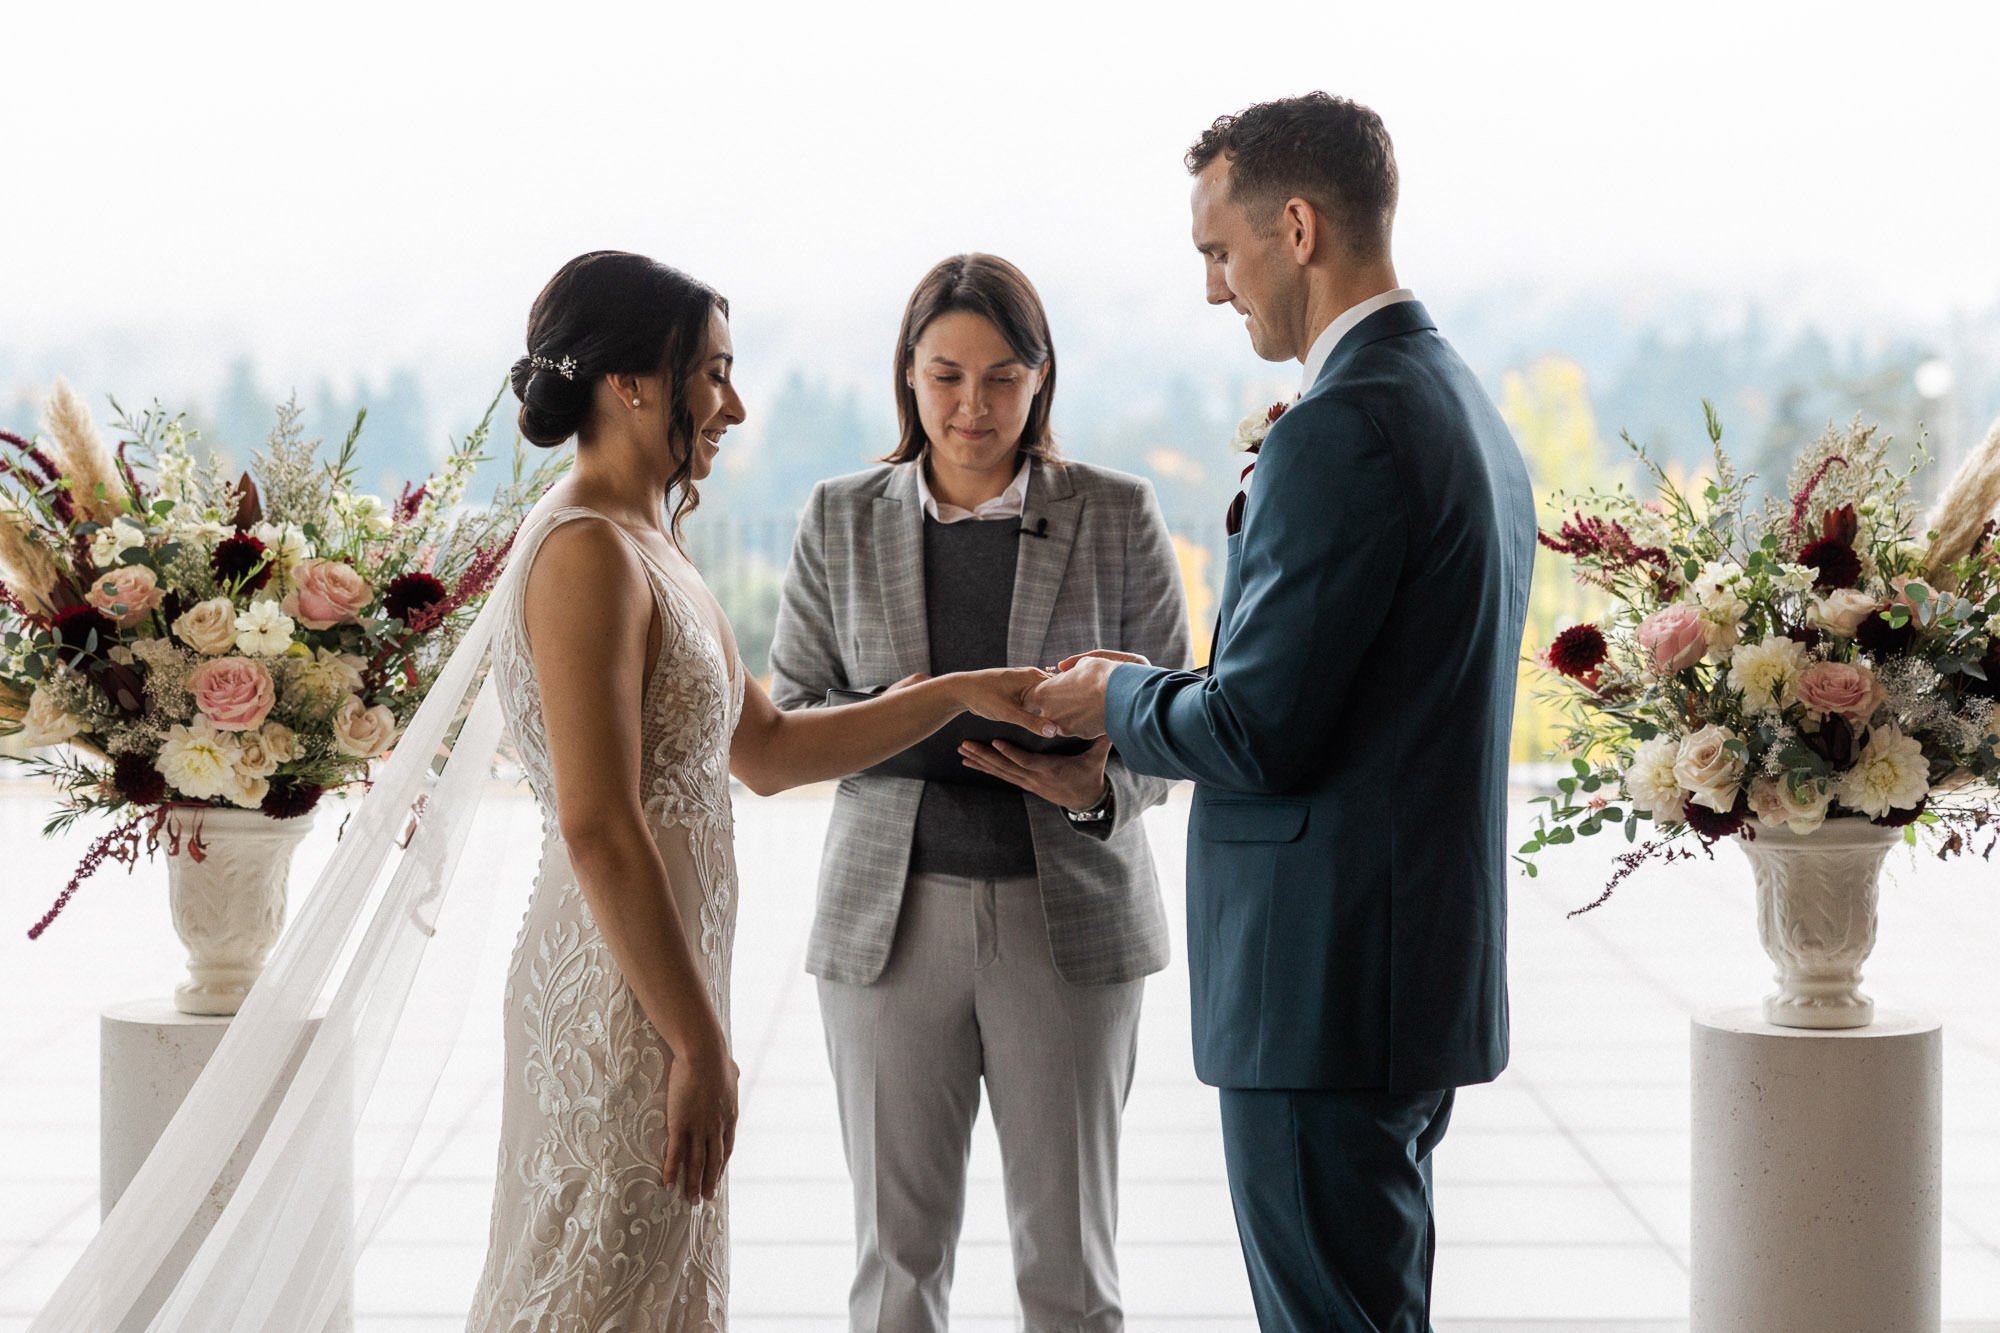 bride and groom exchange rings at ironlight wedding venue in lake oswego, oregon